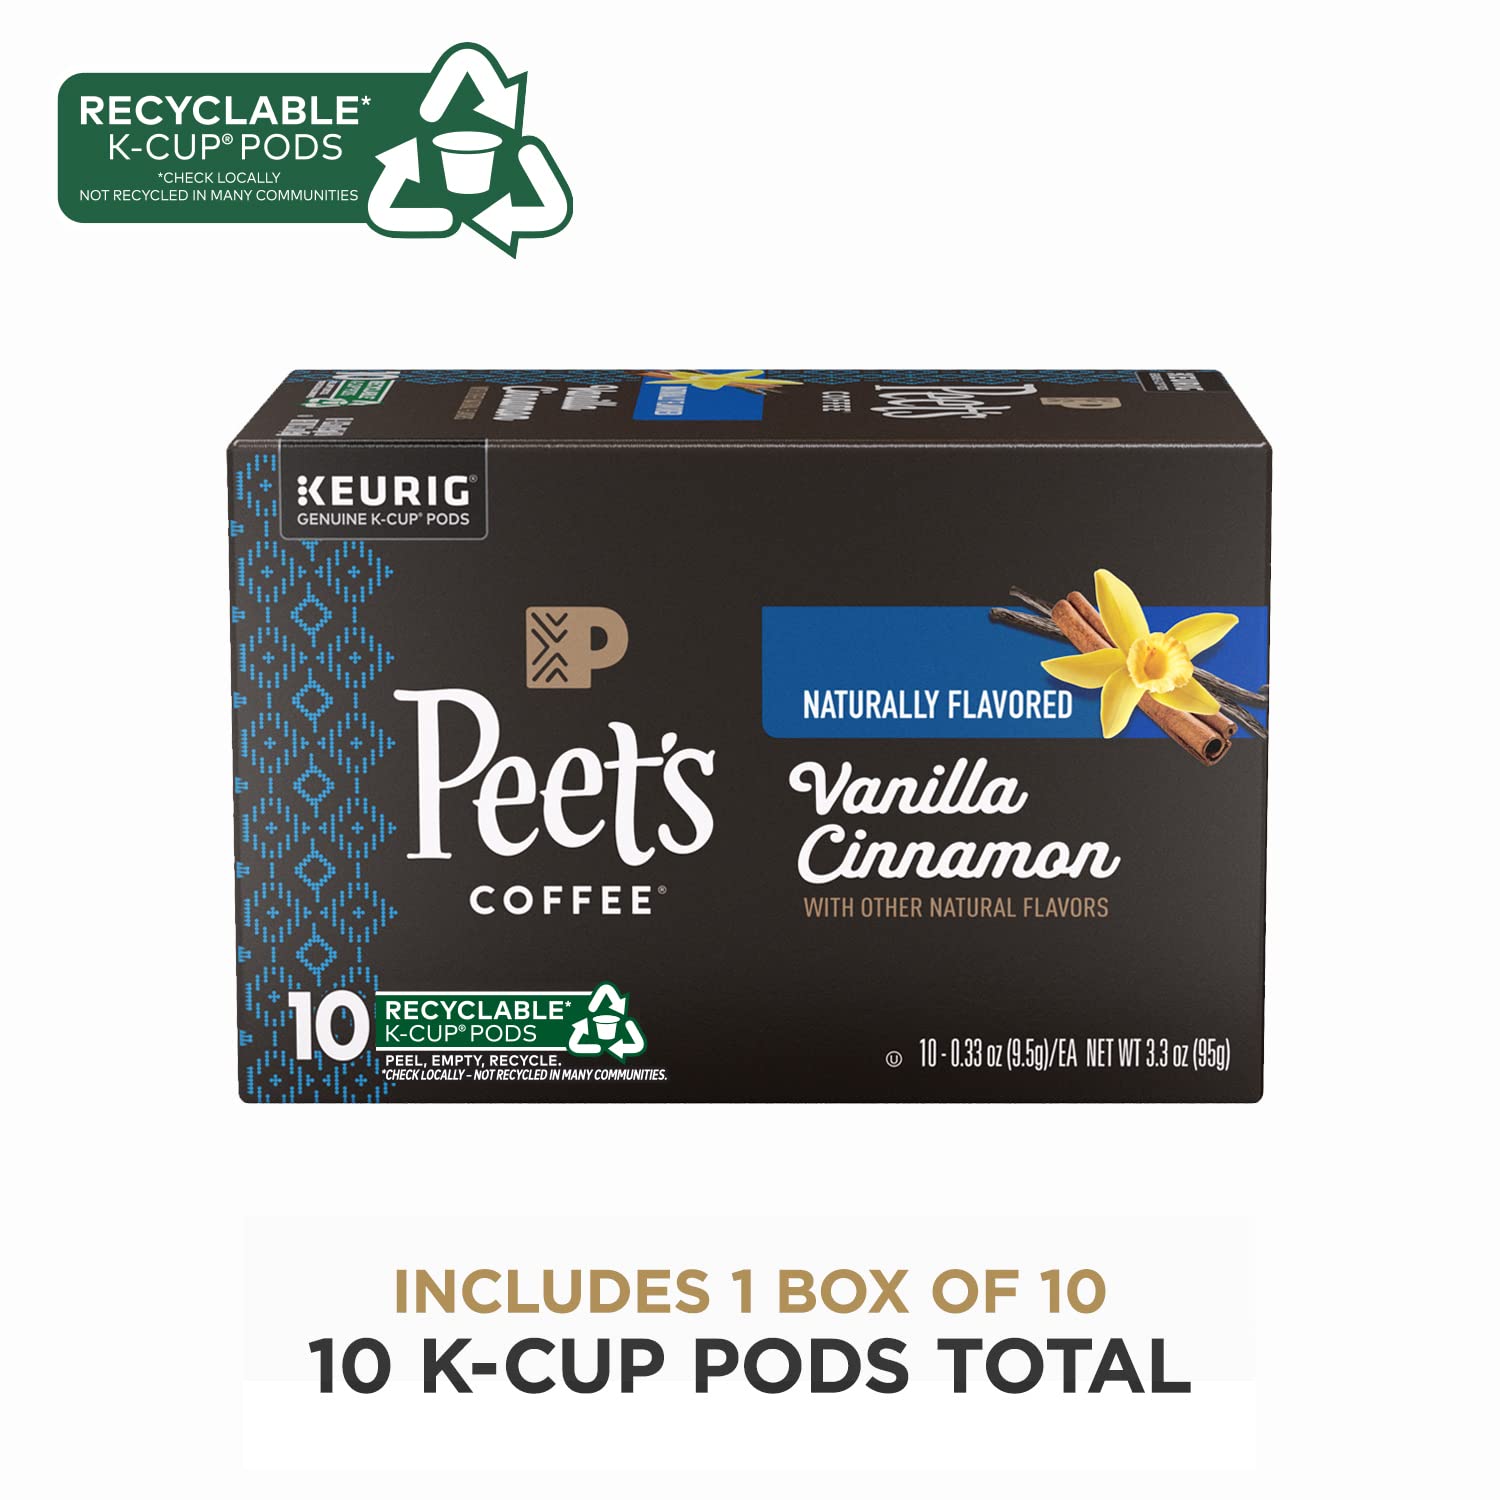 Peet’s Coffee, Vanilla Cinnamon - Flavored Coffee, 10 K-Cup Pods for Keurig Brewers (1 box of 10 pods), Light Roast